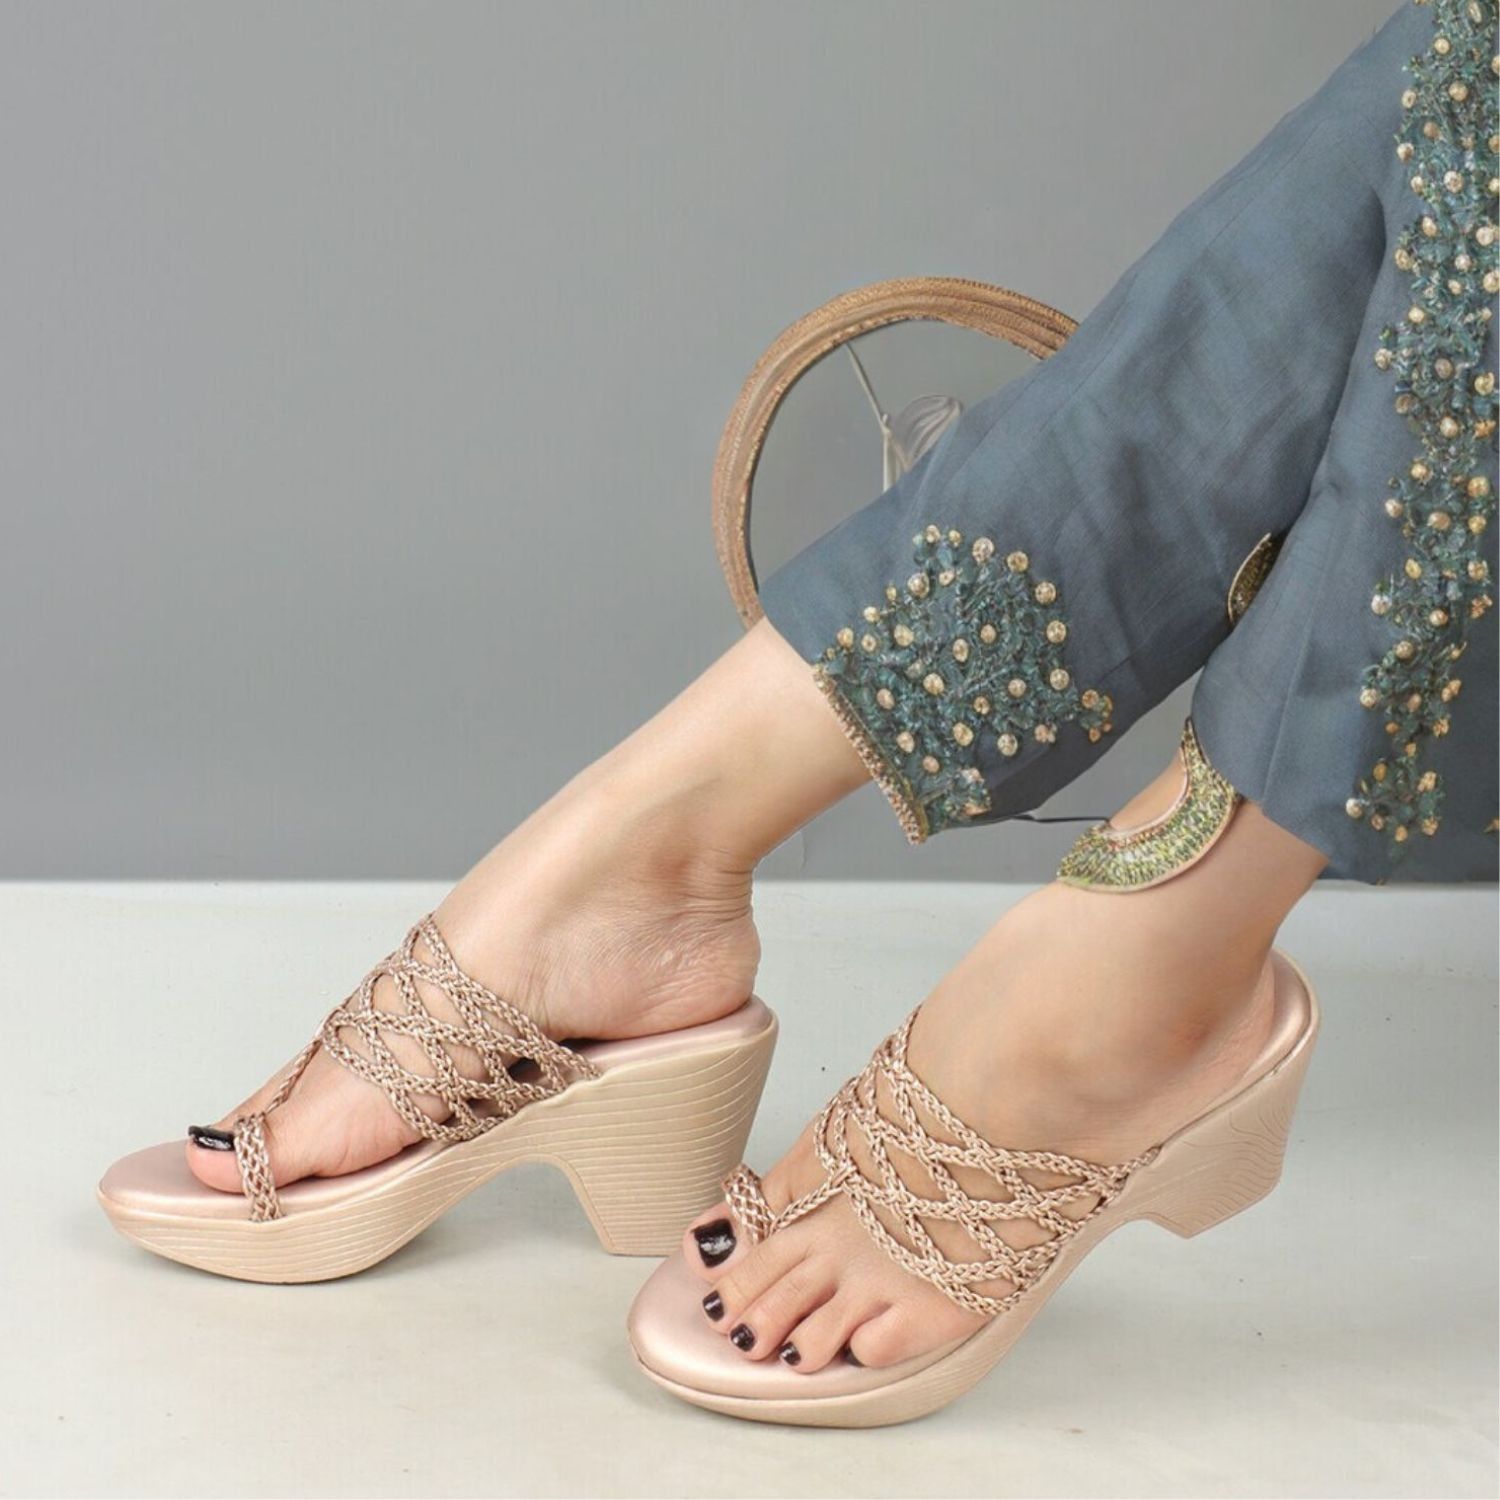 Stepee Stylish & Trendy Cross Strap Embellished Block Heels with Open Back  Slip on Style Fashion Sandal for Women